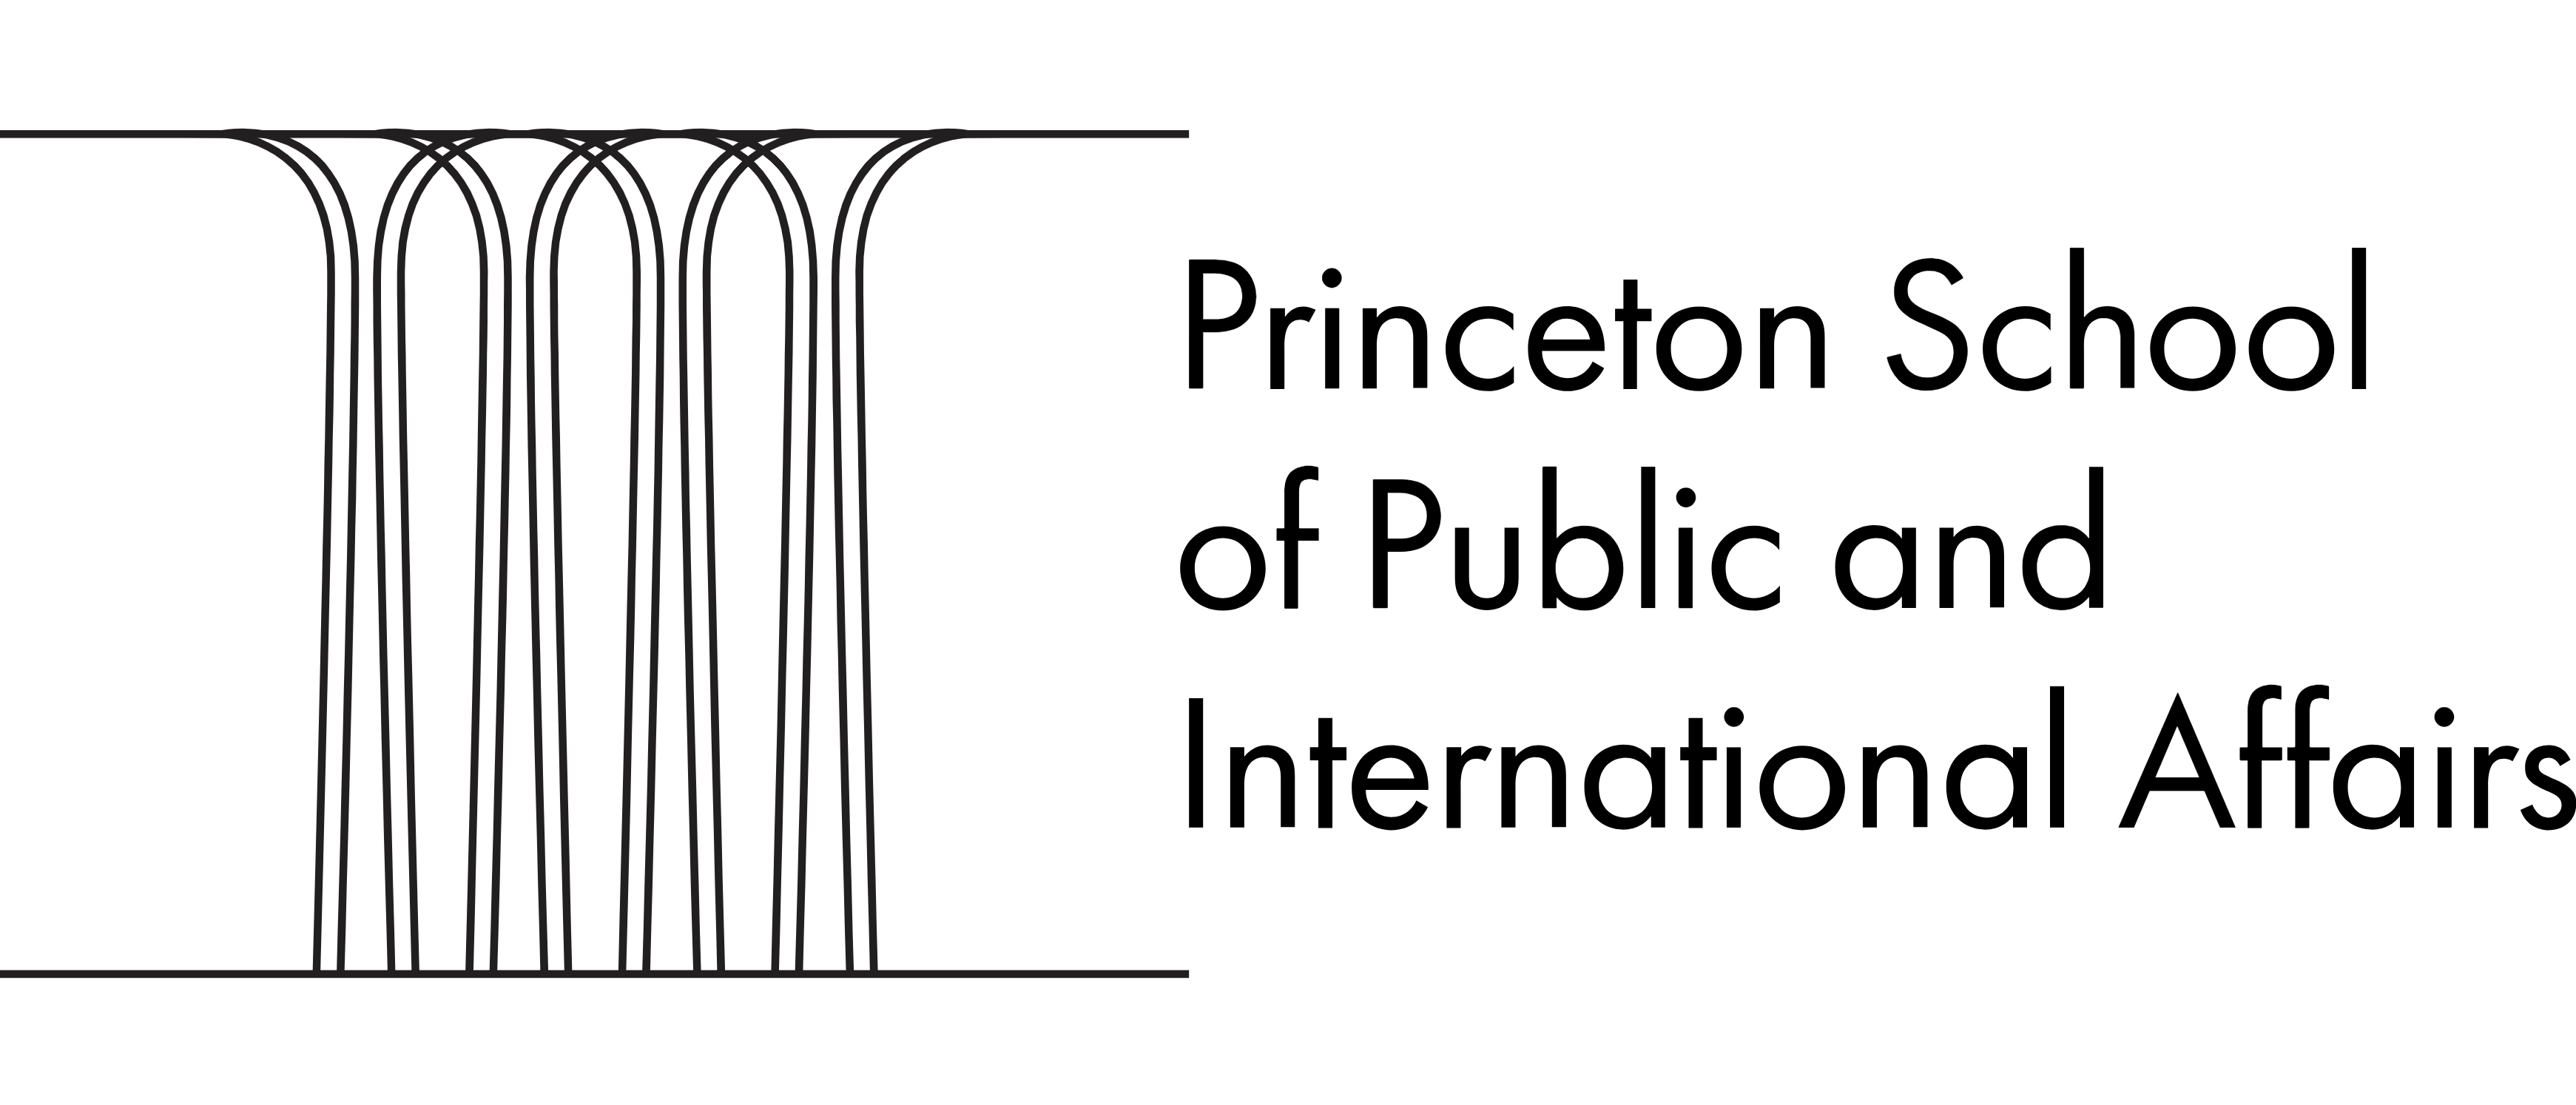 SPIA logo